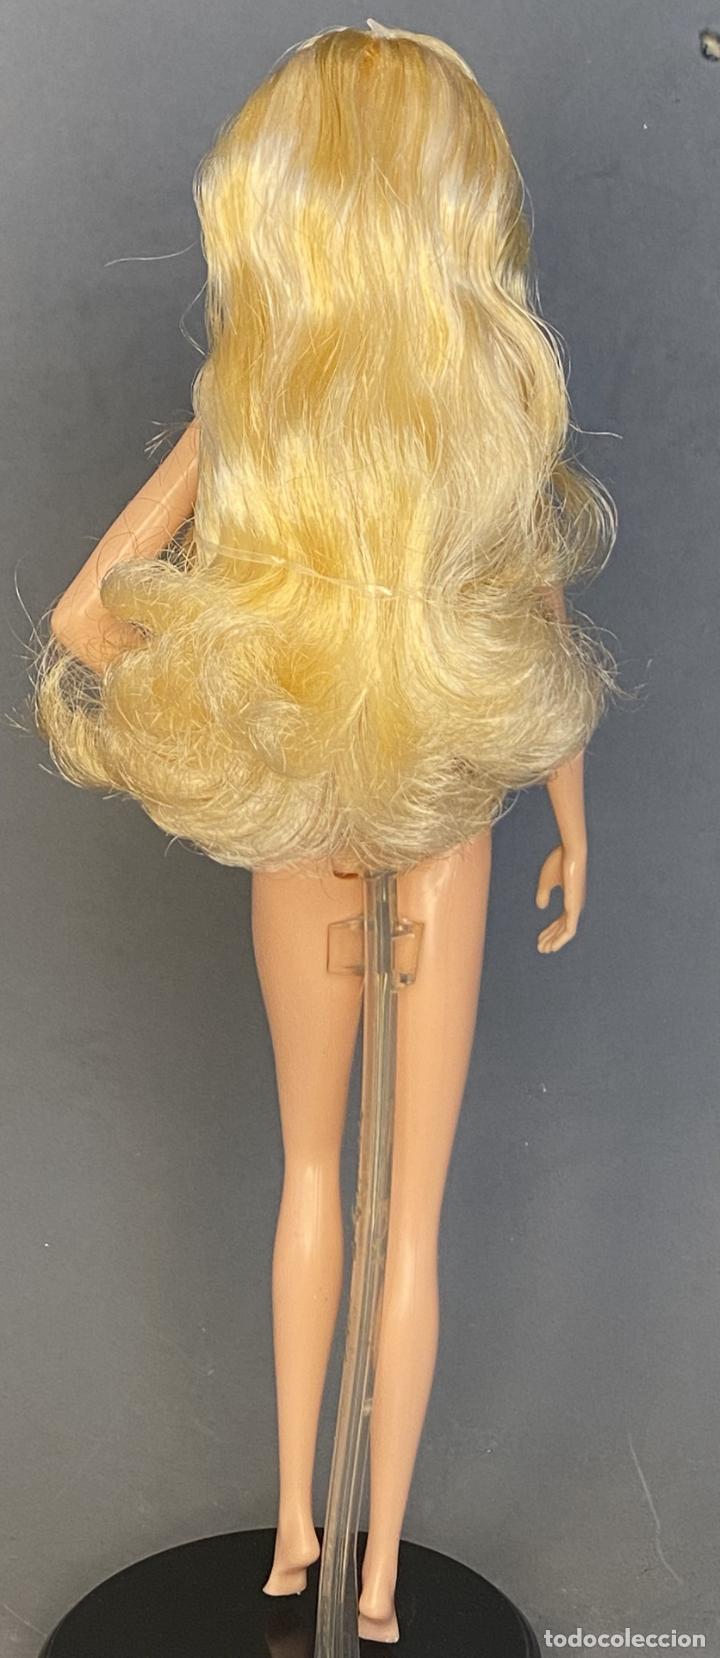 Virtual Barbie Doll - muÃ±eca desnuda, doll nude barbie top model - Buy Barbie and Ken dolls on  todocoleccion